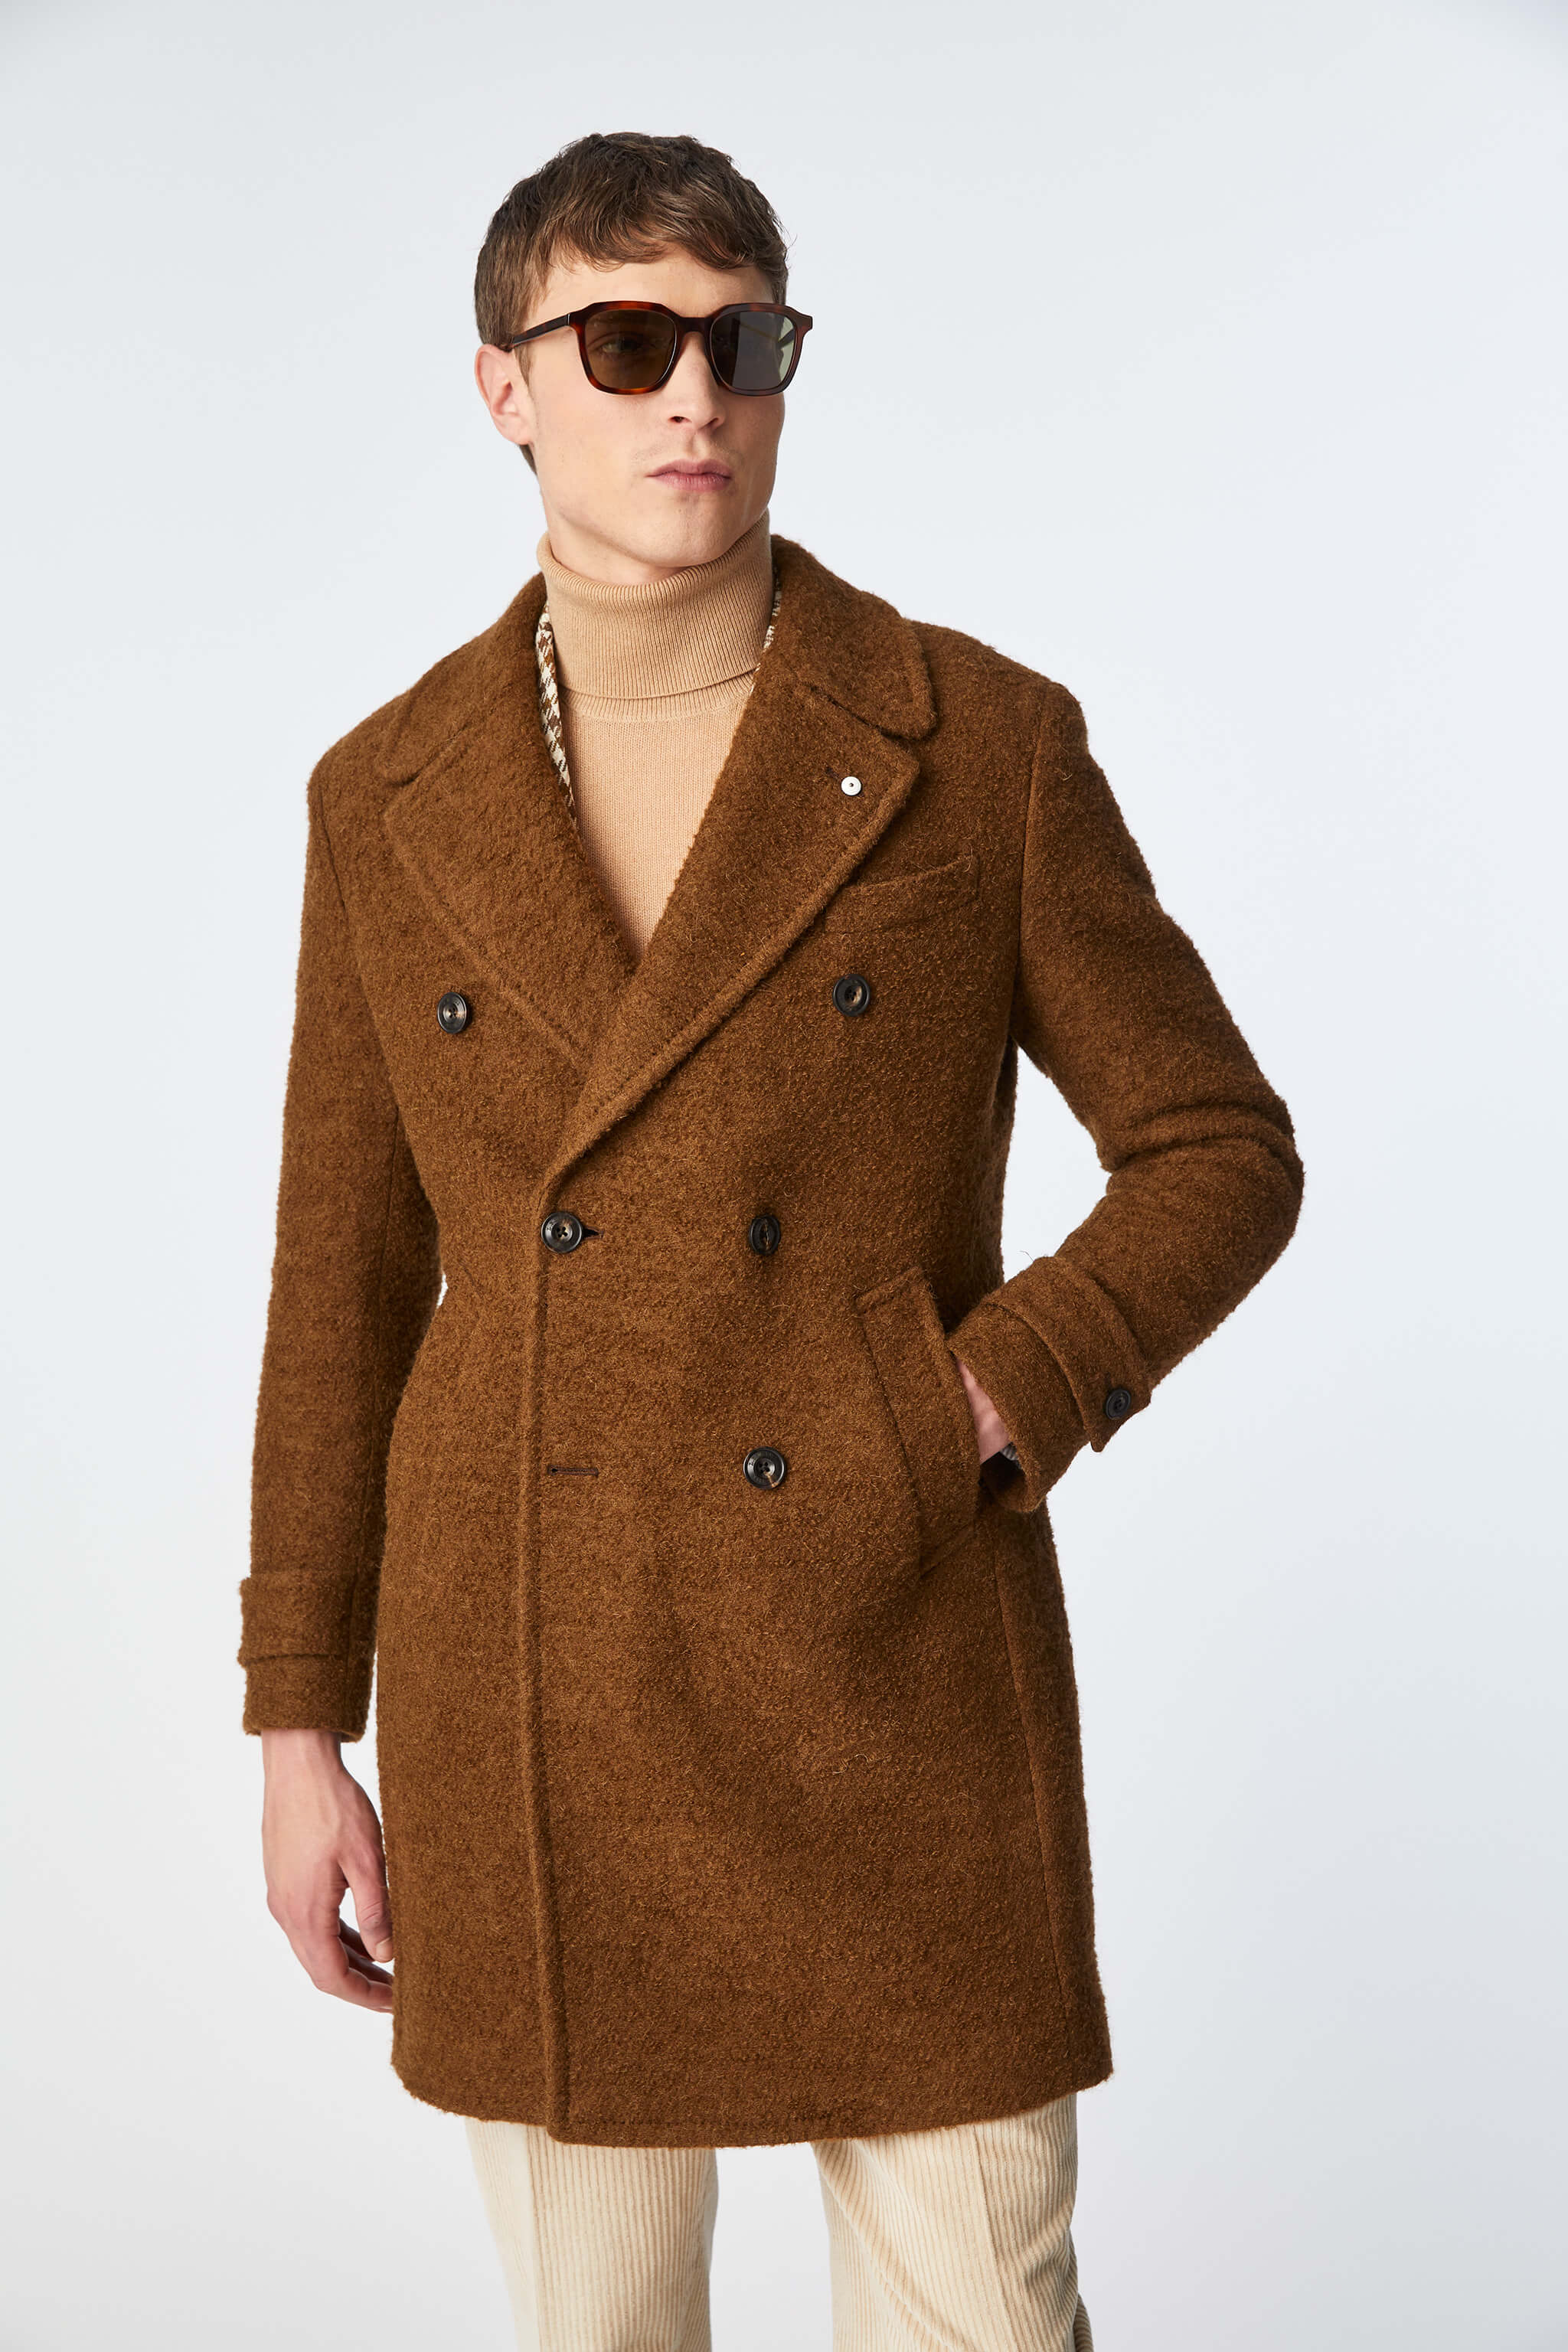 ORSETTO coat in brown